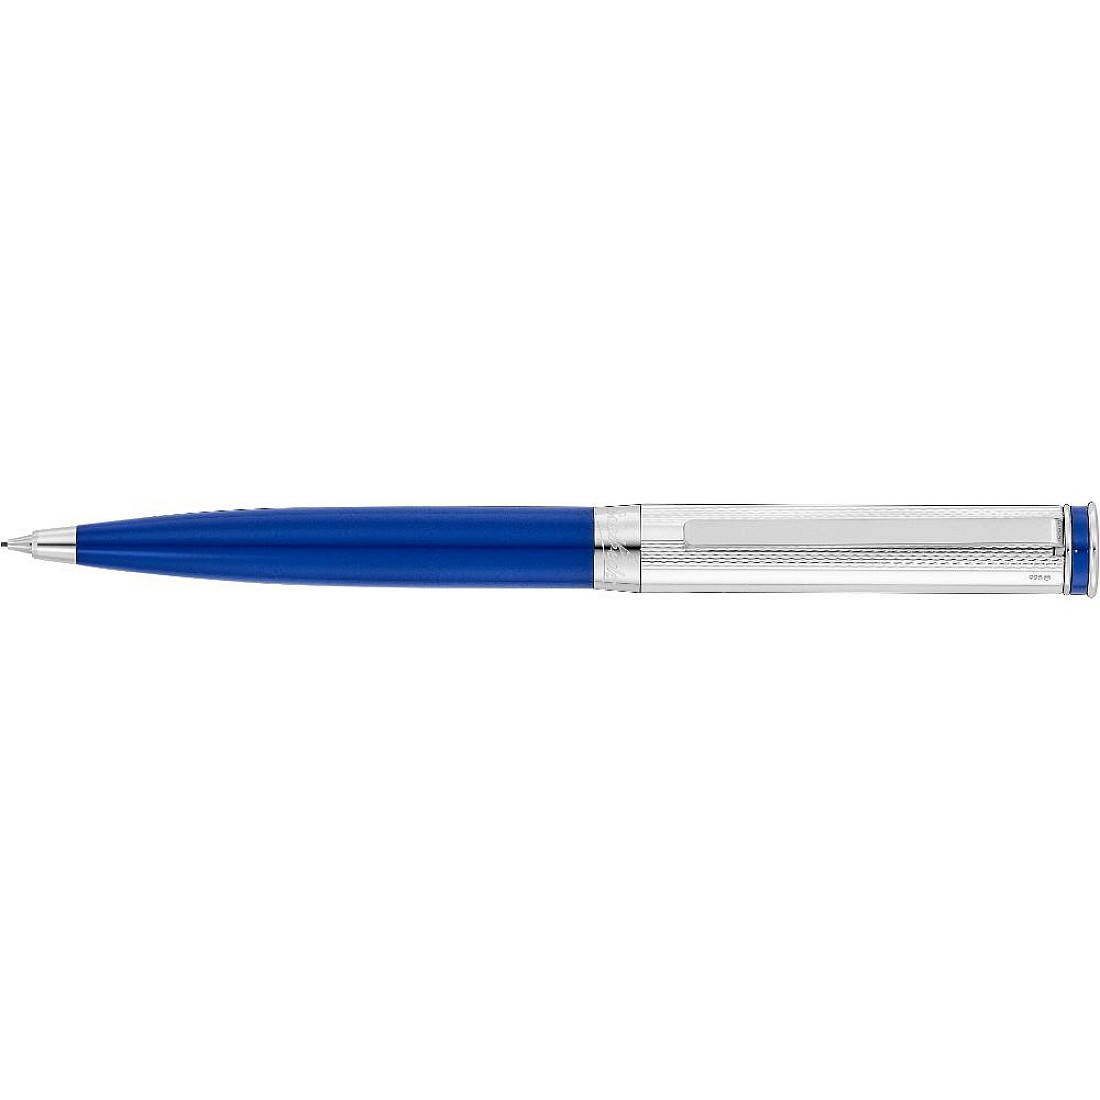 Waldmann Edelfeder Marine Blue Mechanical Pencil 0.7mm